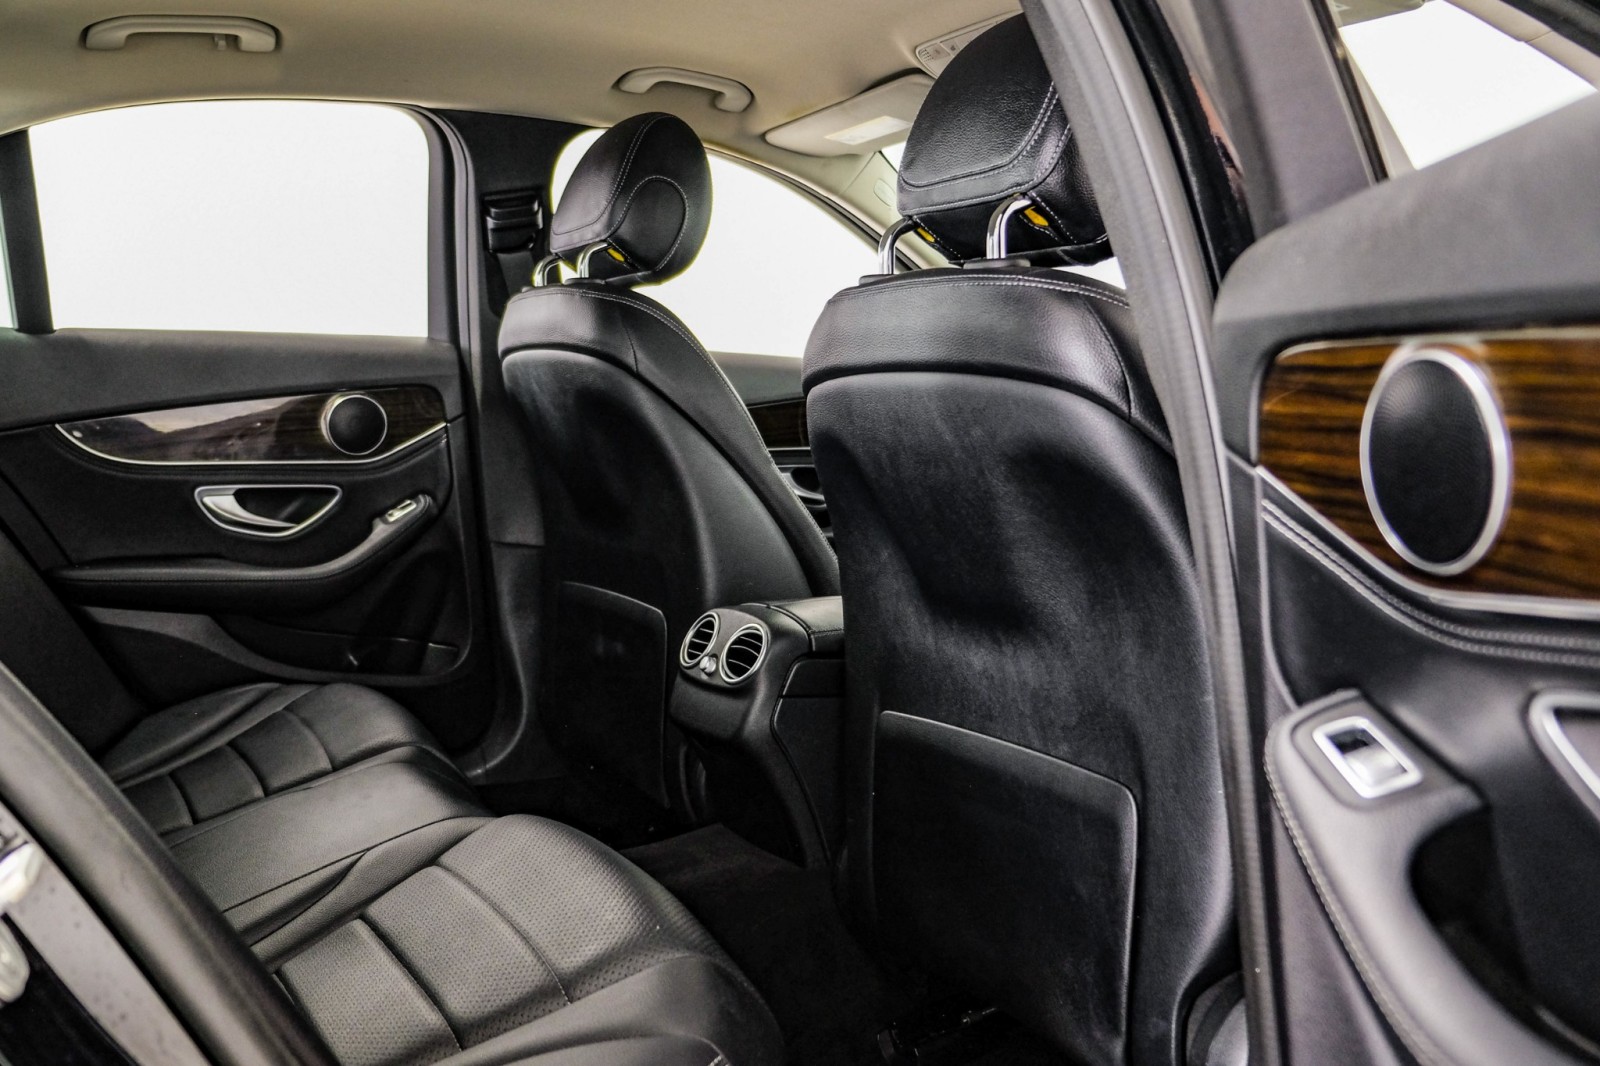 2015 Mercedes-Benz C300 SPORT BLIND SPOT ASSIST NAVIGATION LEATHER SEATS R 36